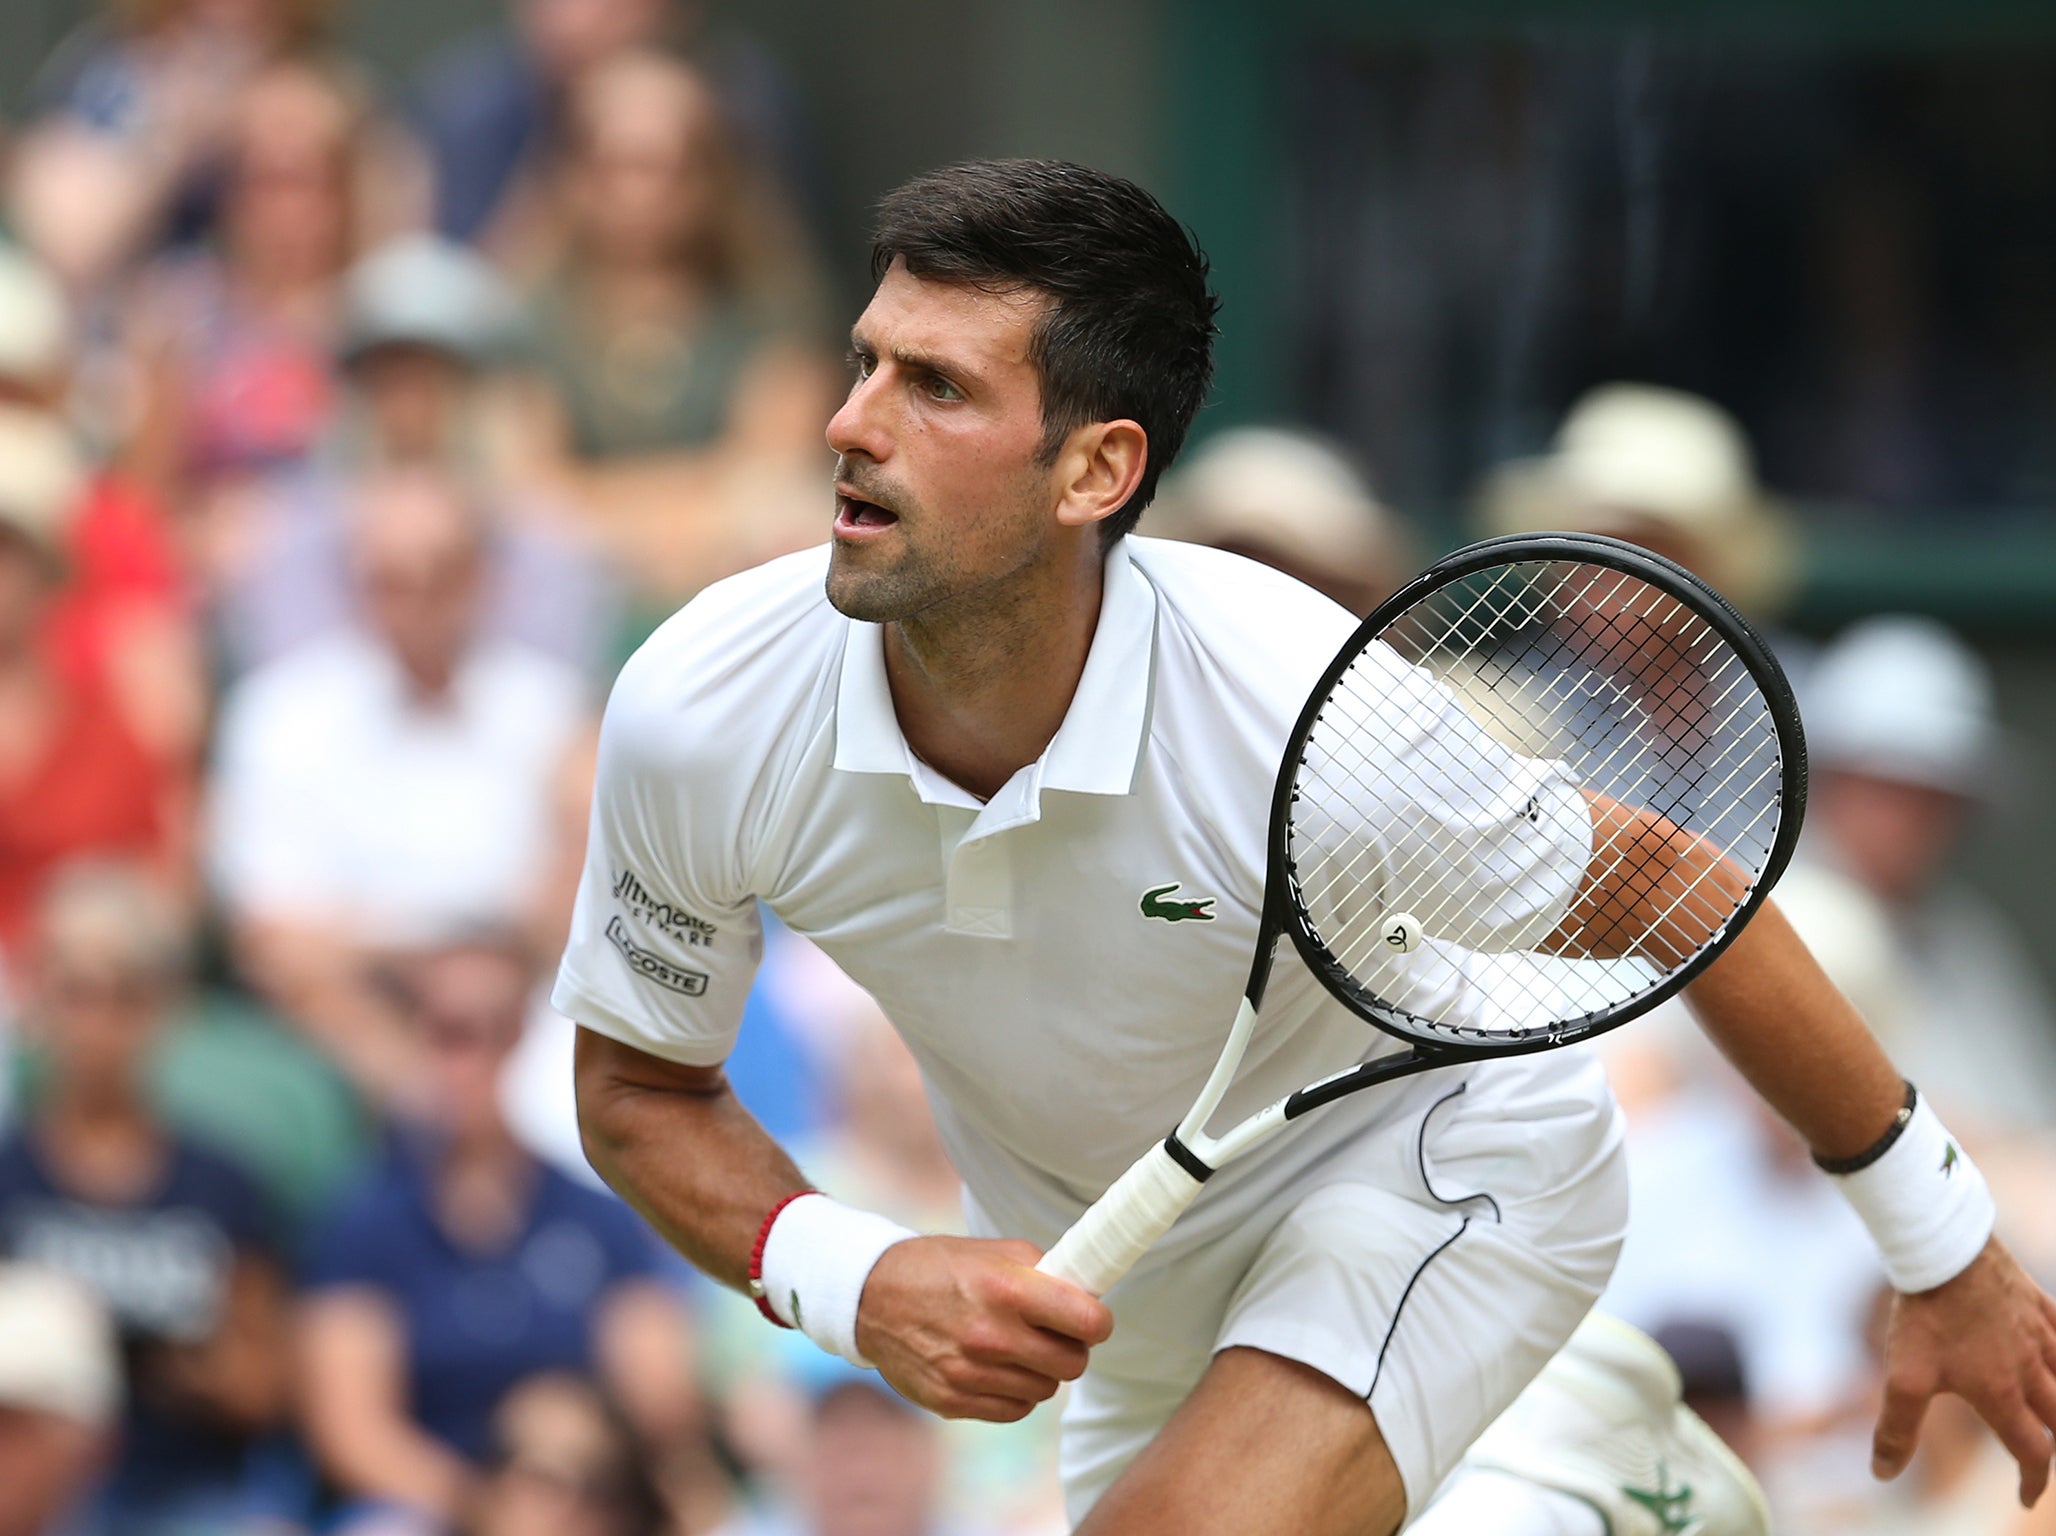 Wimbledon 2019 Novak Djokovic the pick of the ‘Big Three’ heading into